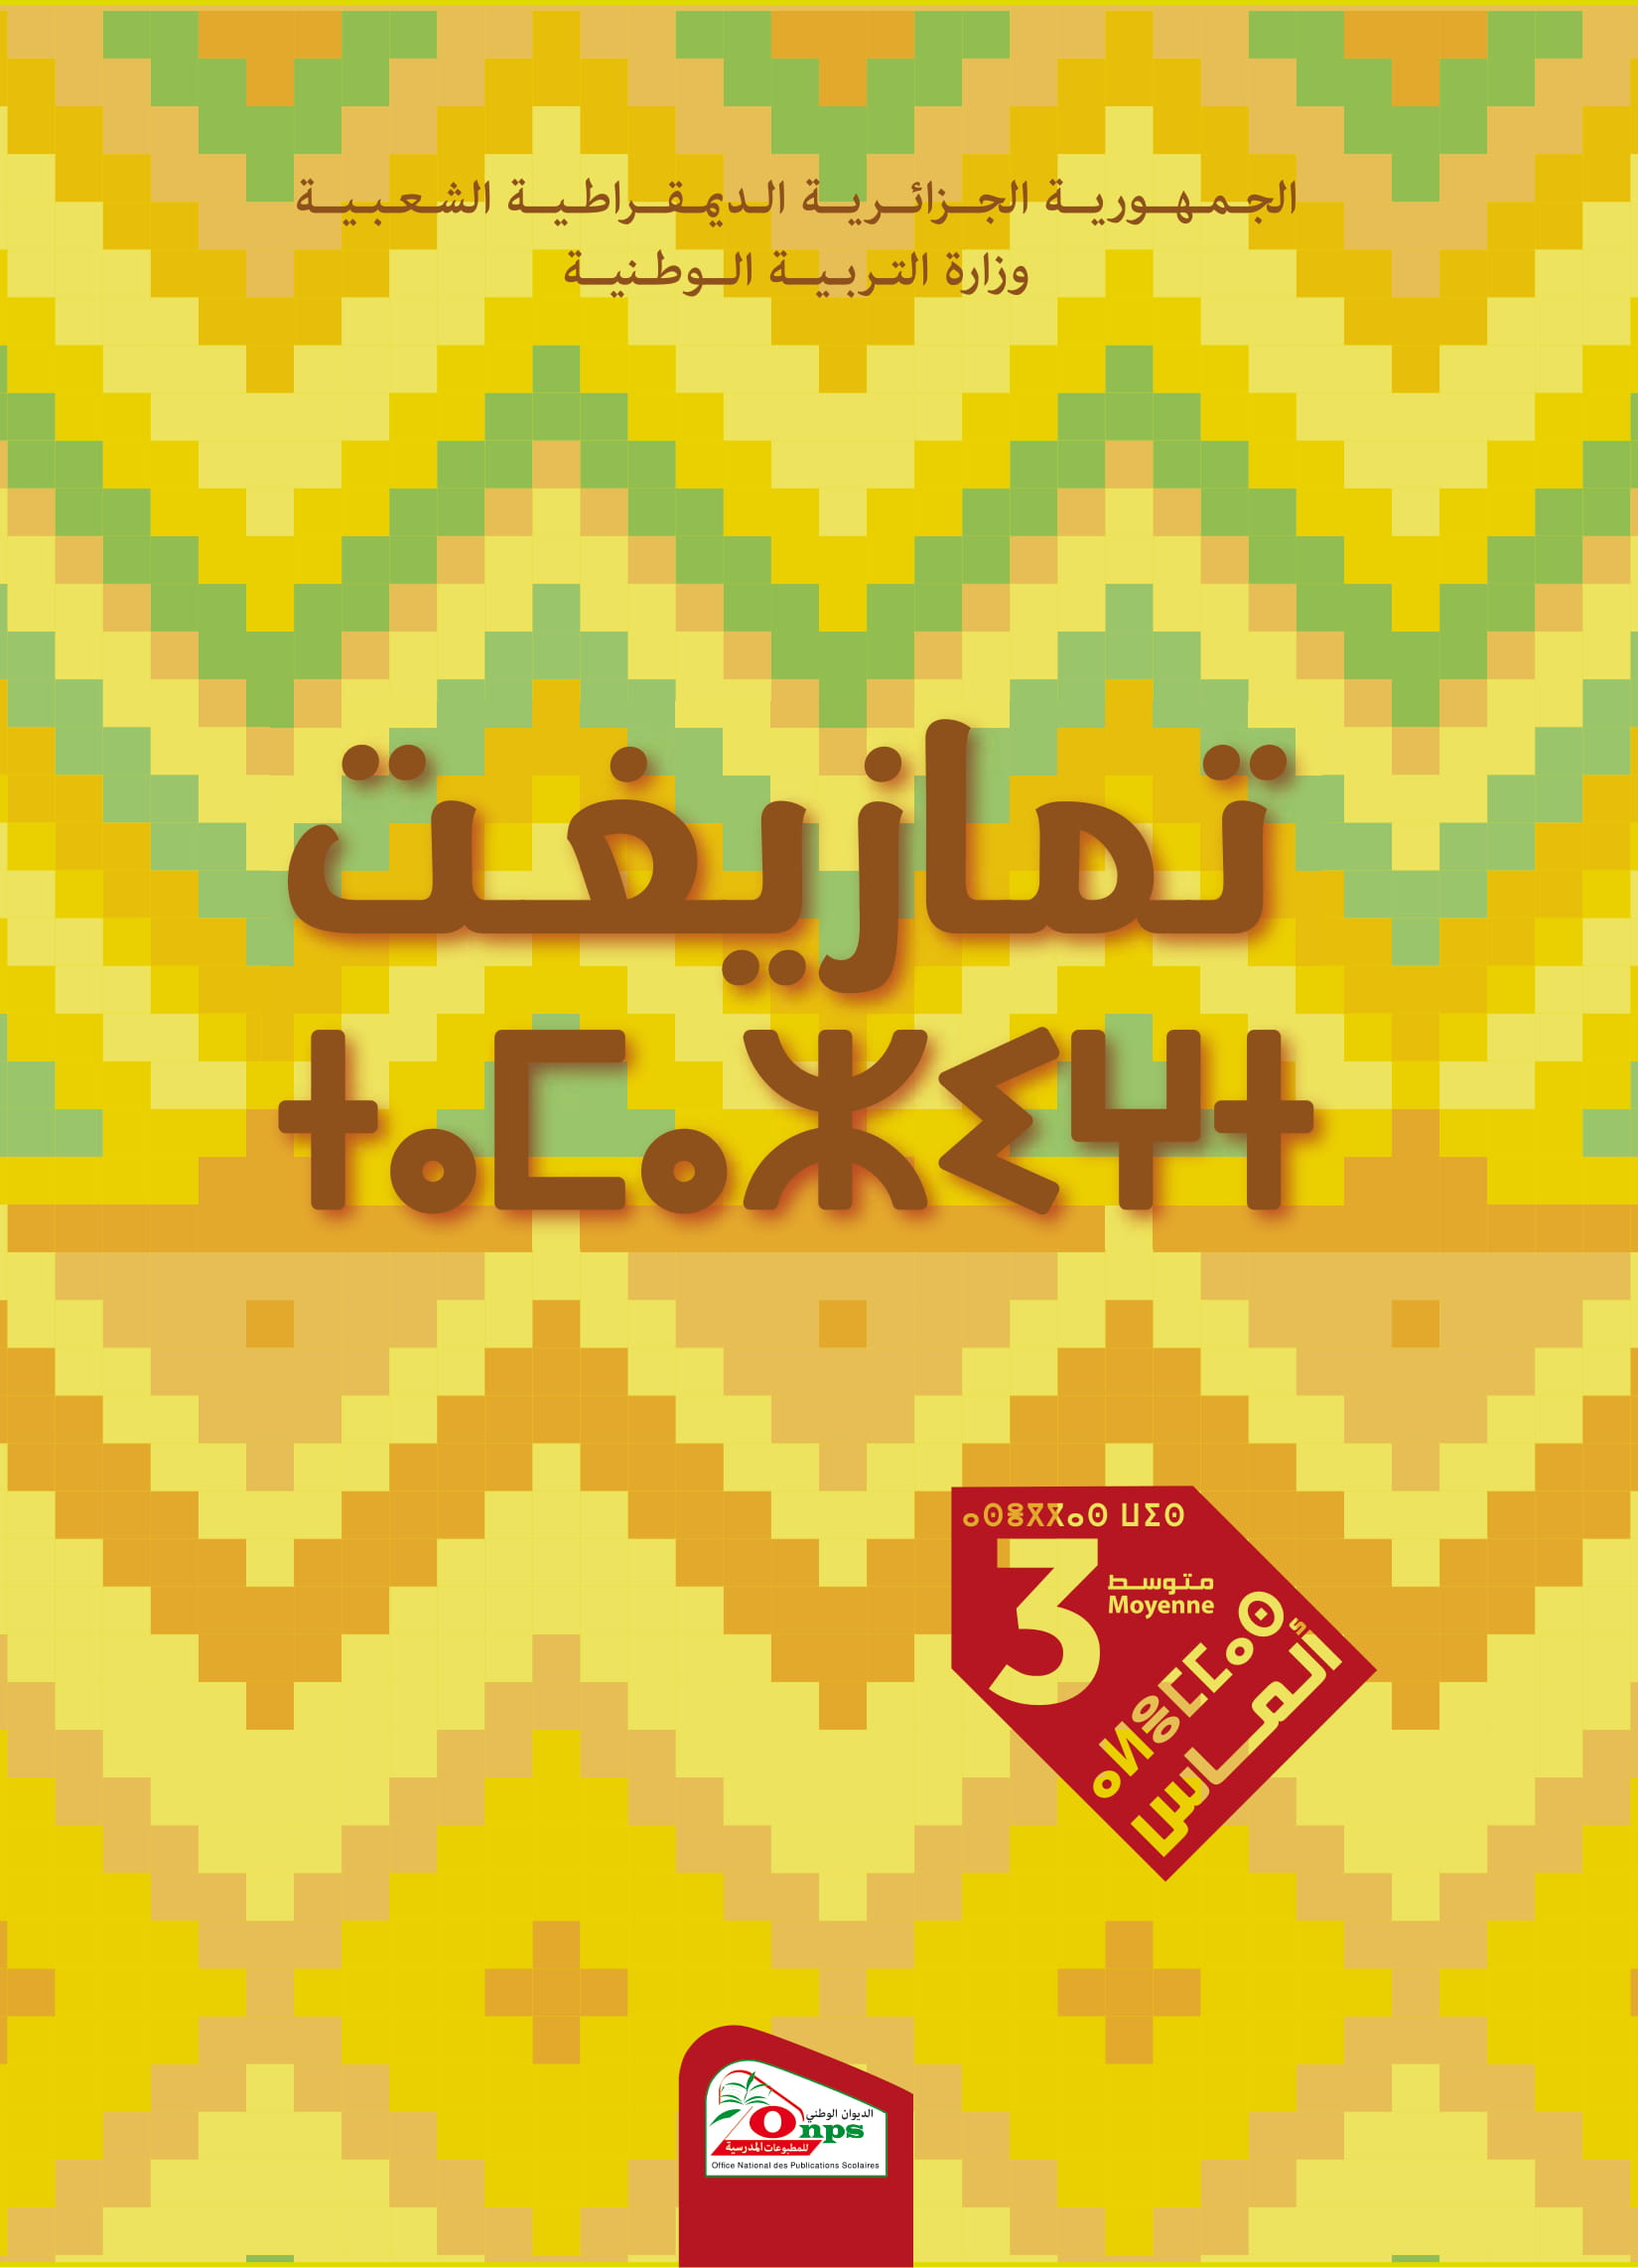 MS 914 Couverture Amazigh arabe 3AM 1 - الديوان الوطني للمطبوعات المدرسية